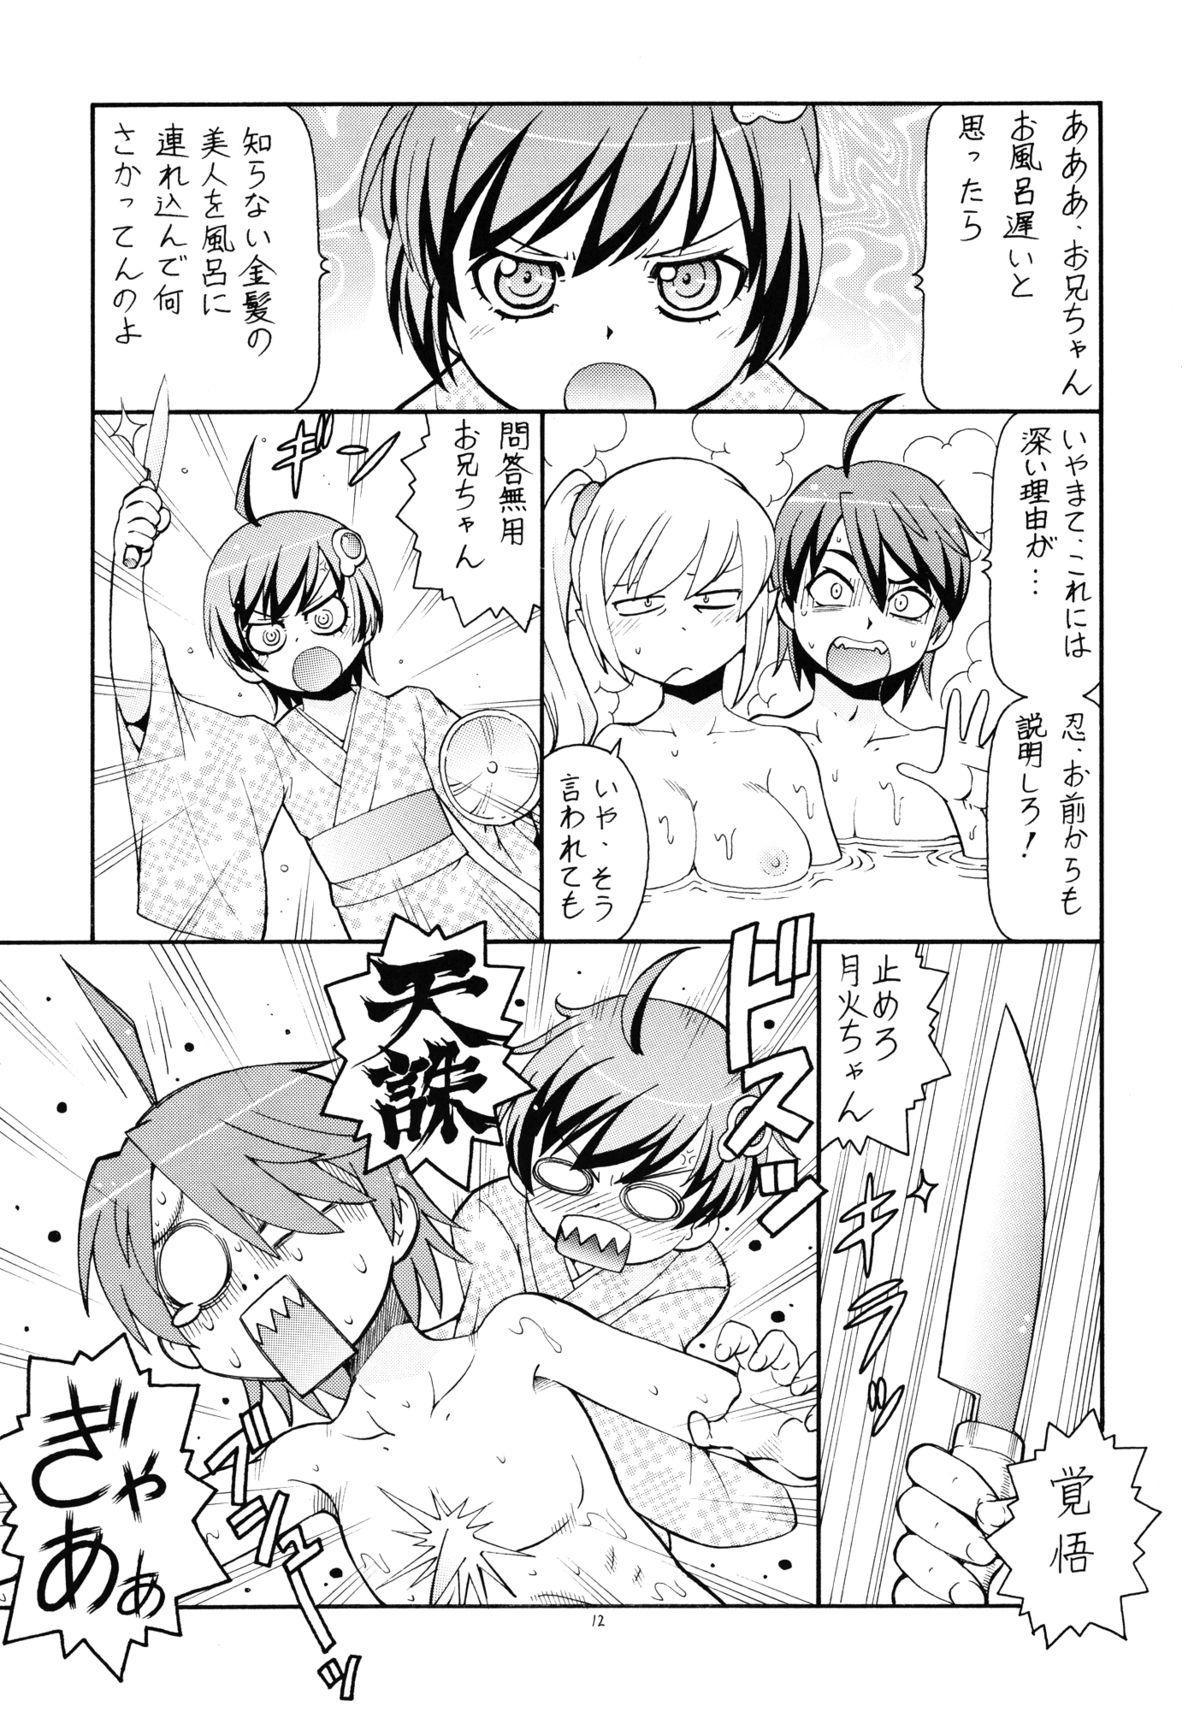 Van Hito ni Hakanai to Kaite "Araragi" to Yomu 5&6 - Bakemonogatari The - Page 13